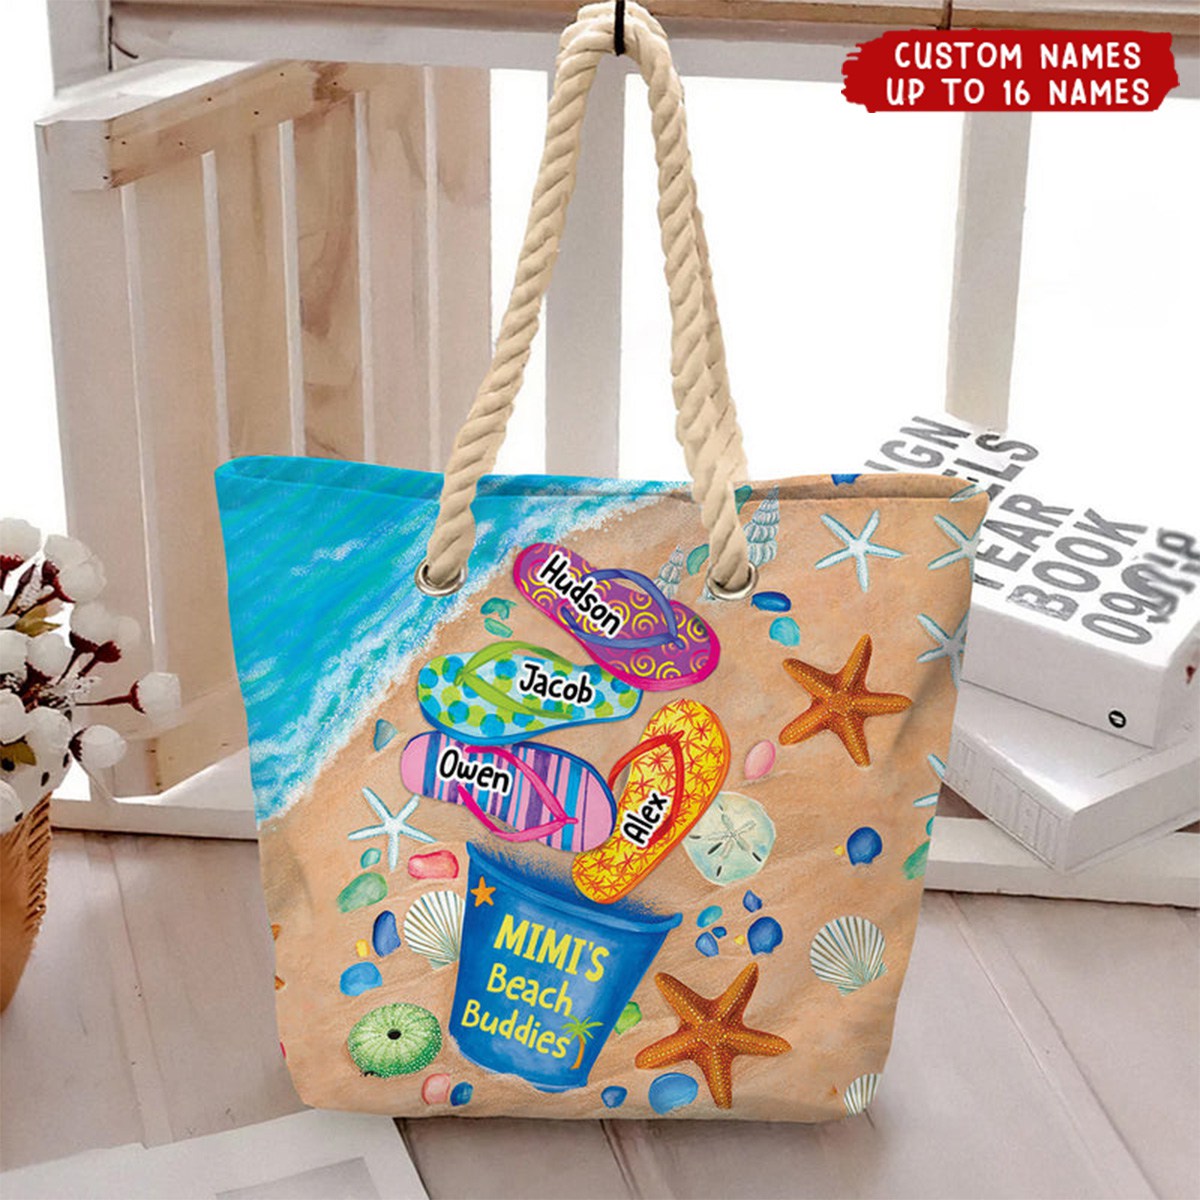 Nana's Beach Buddies Summer Flip Flop - Personalized Beach Bag - Gift for Grandmas Moms Aunties